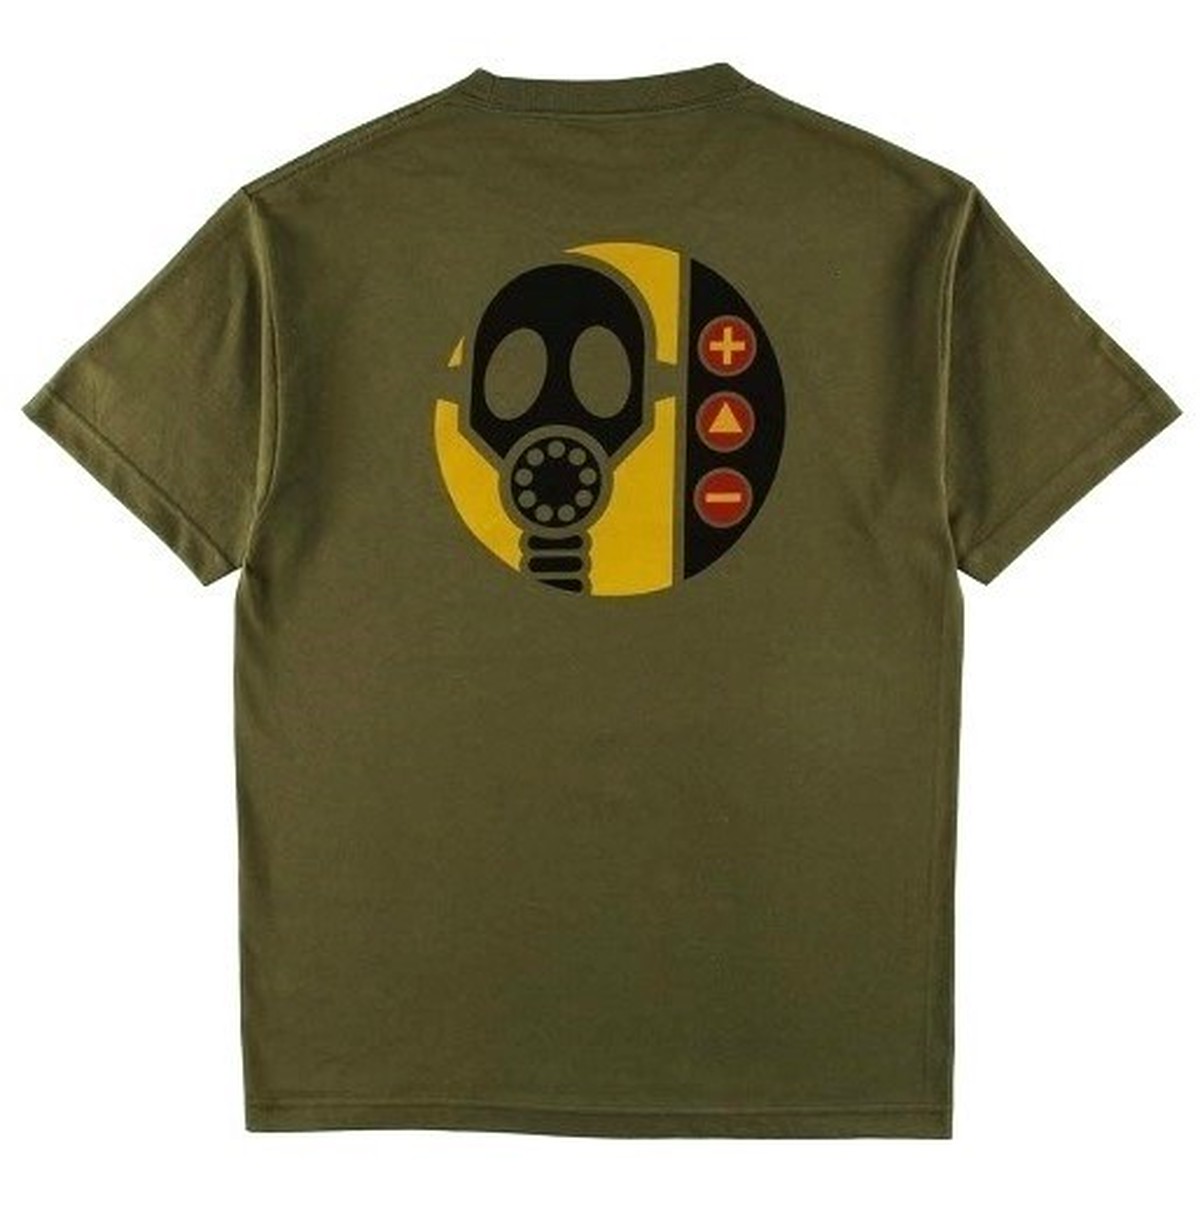 Alien Workshop Gasmask Tee Army エイリアンワークショップ ガスマスク Tシャツ アーミー Pretzels Skateboard And Culture